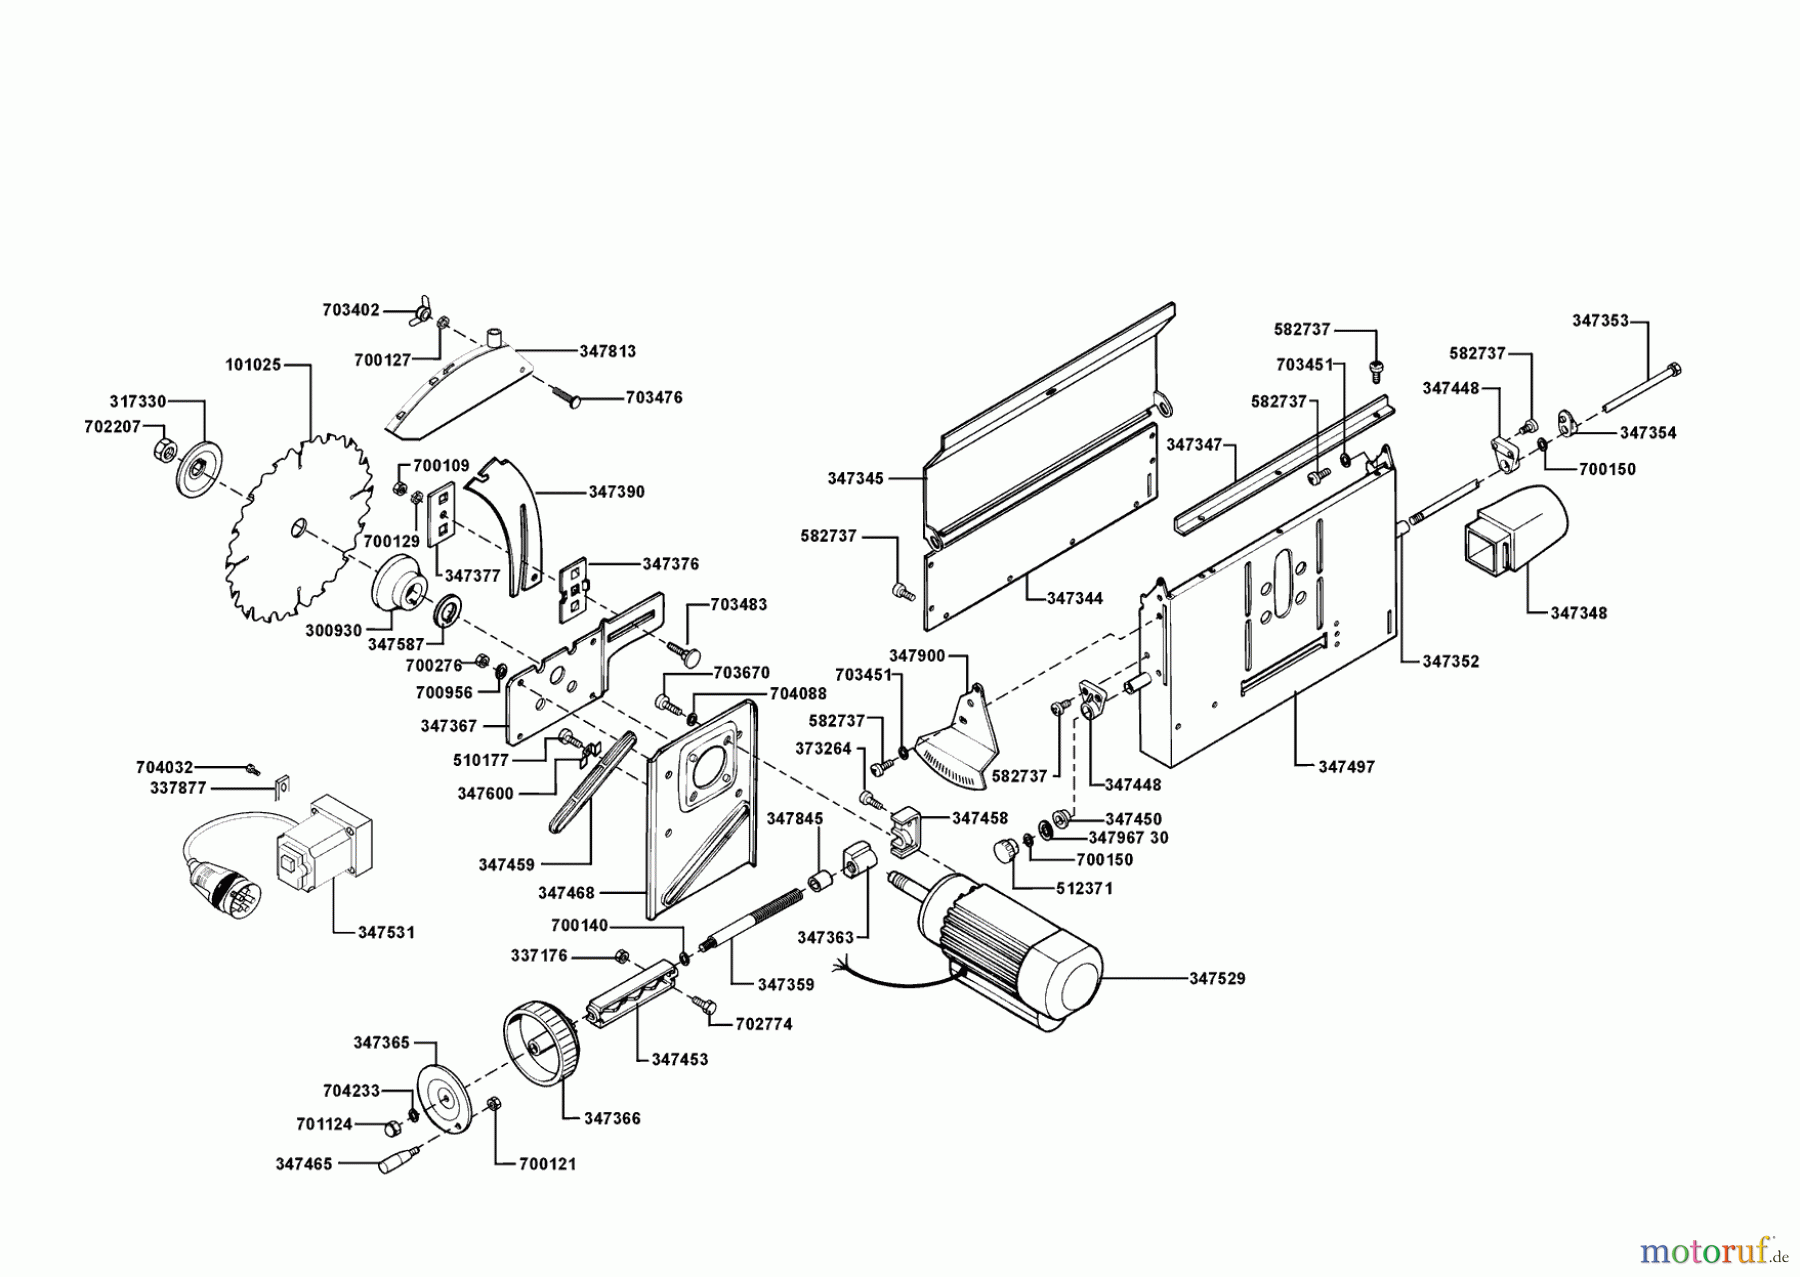  AL-KO Heimwerkertechnik Präzisionskreissägen Basic 400 V ab 01/2000 Seite 2